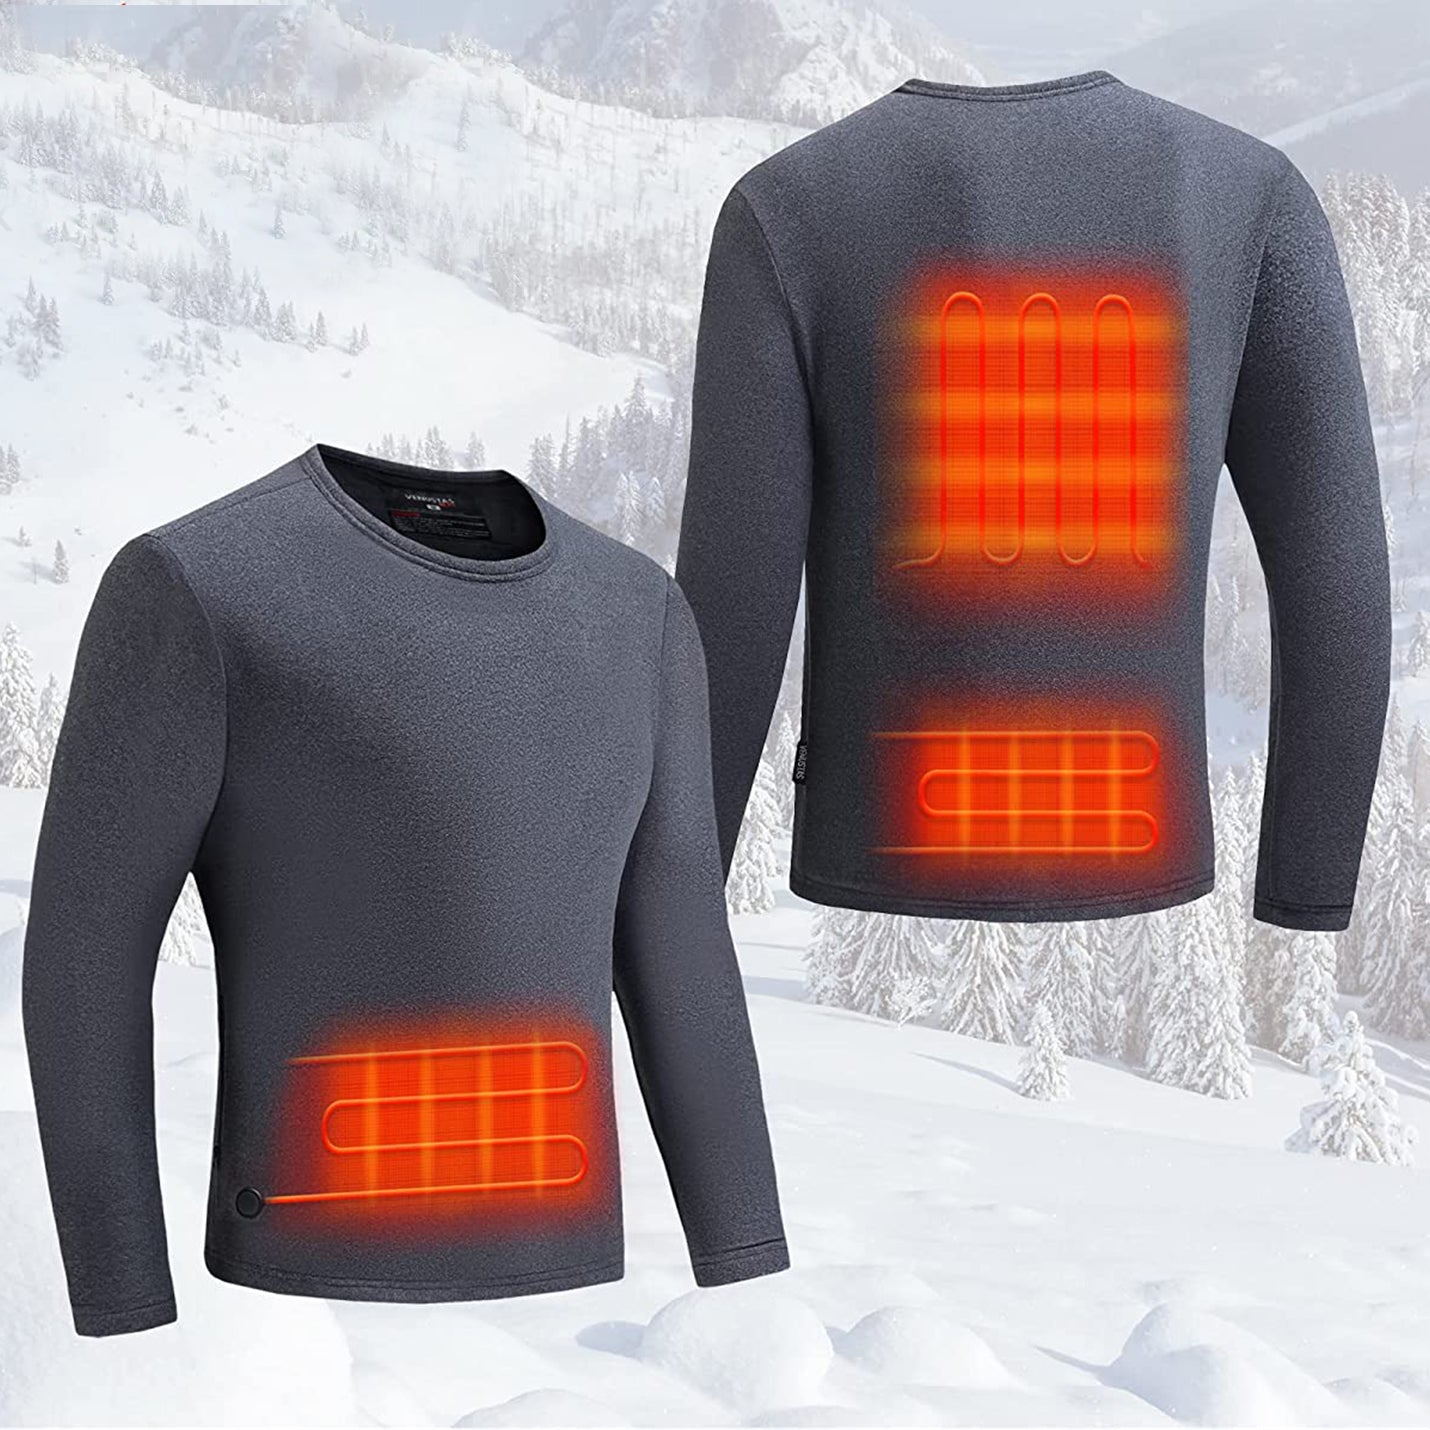 Blacktend™ Heated Thermal Shirt